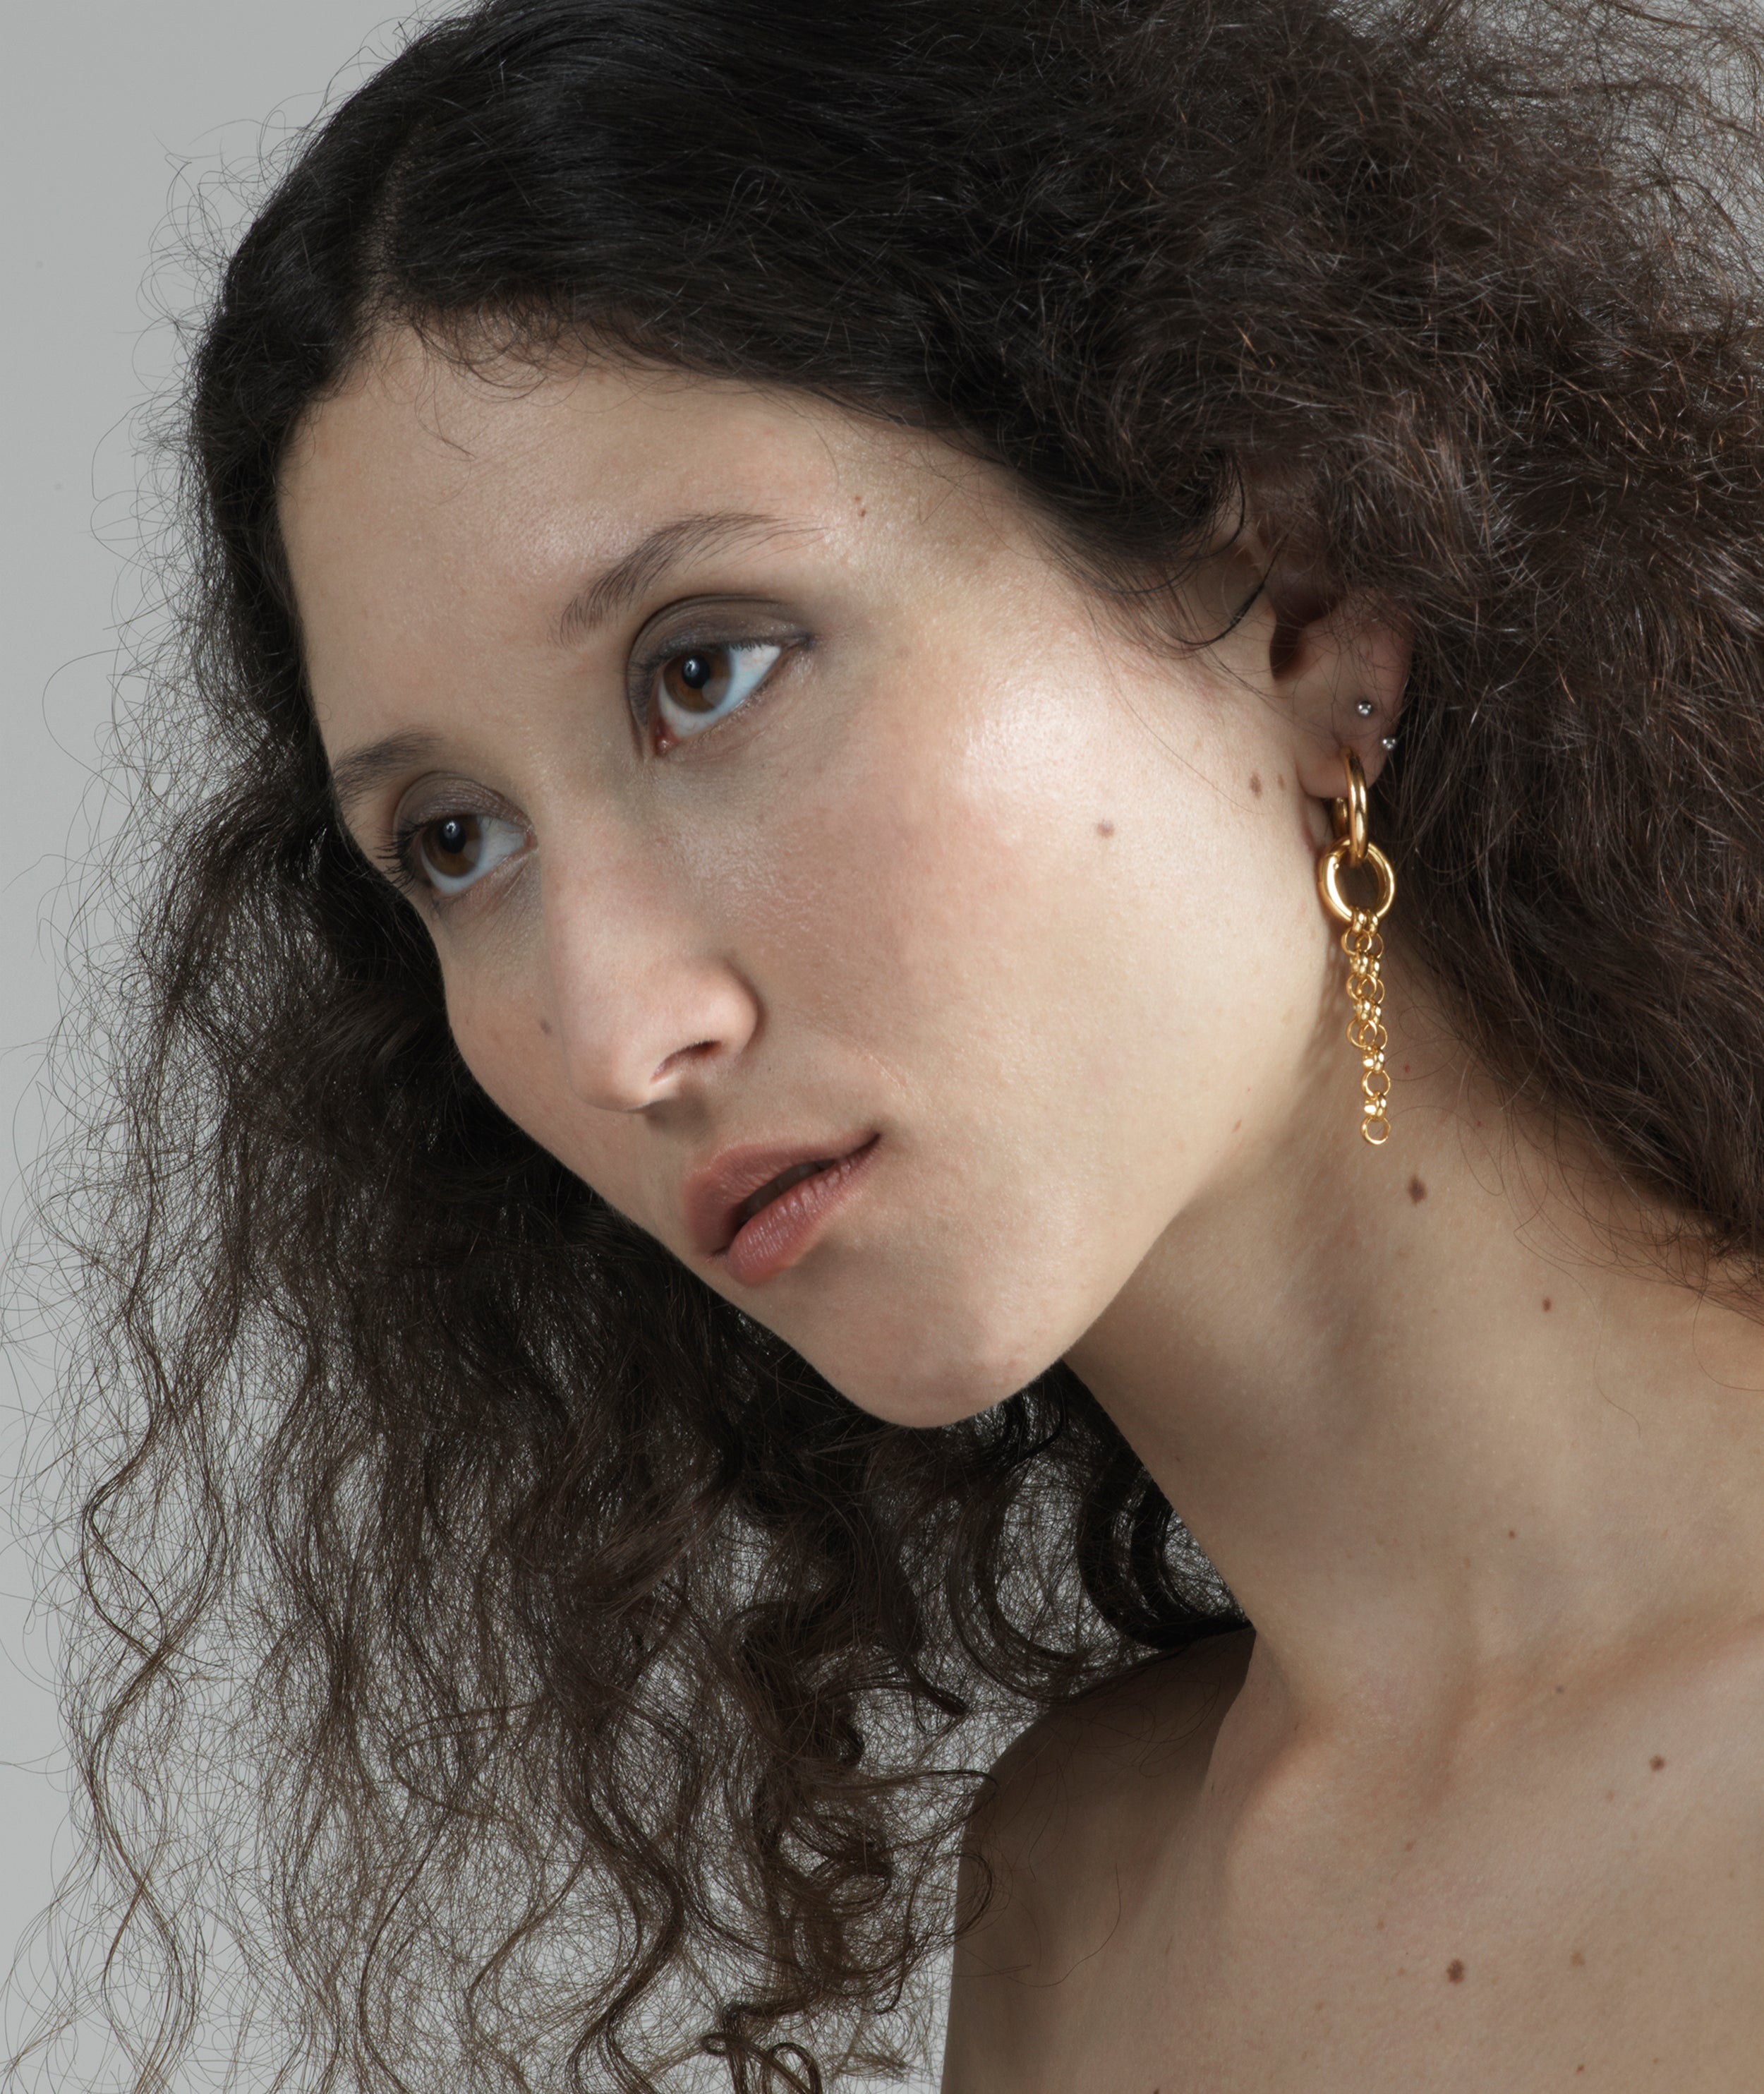 llayers jewelry women unisex chain gold hoops earrings jewelry minimal - Made in Brooklyn New York 1A